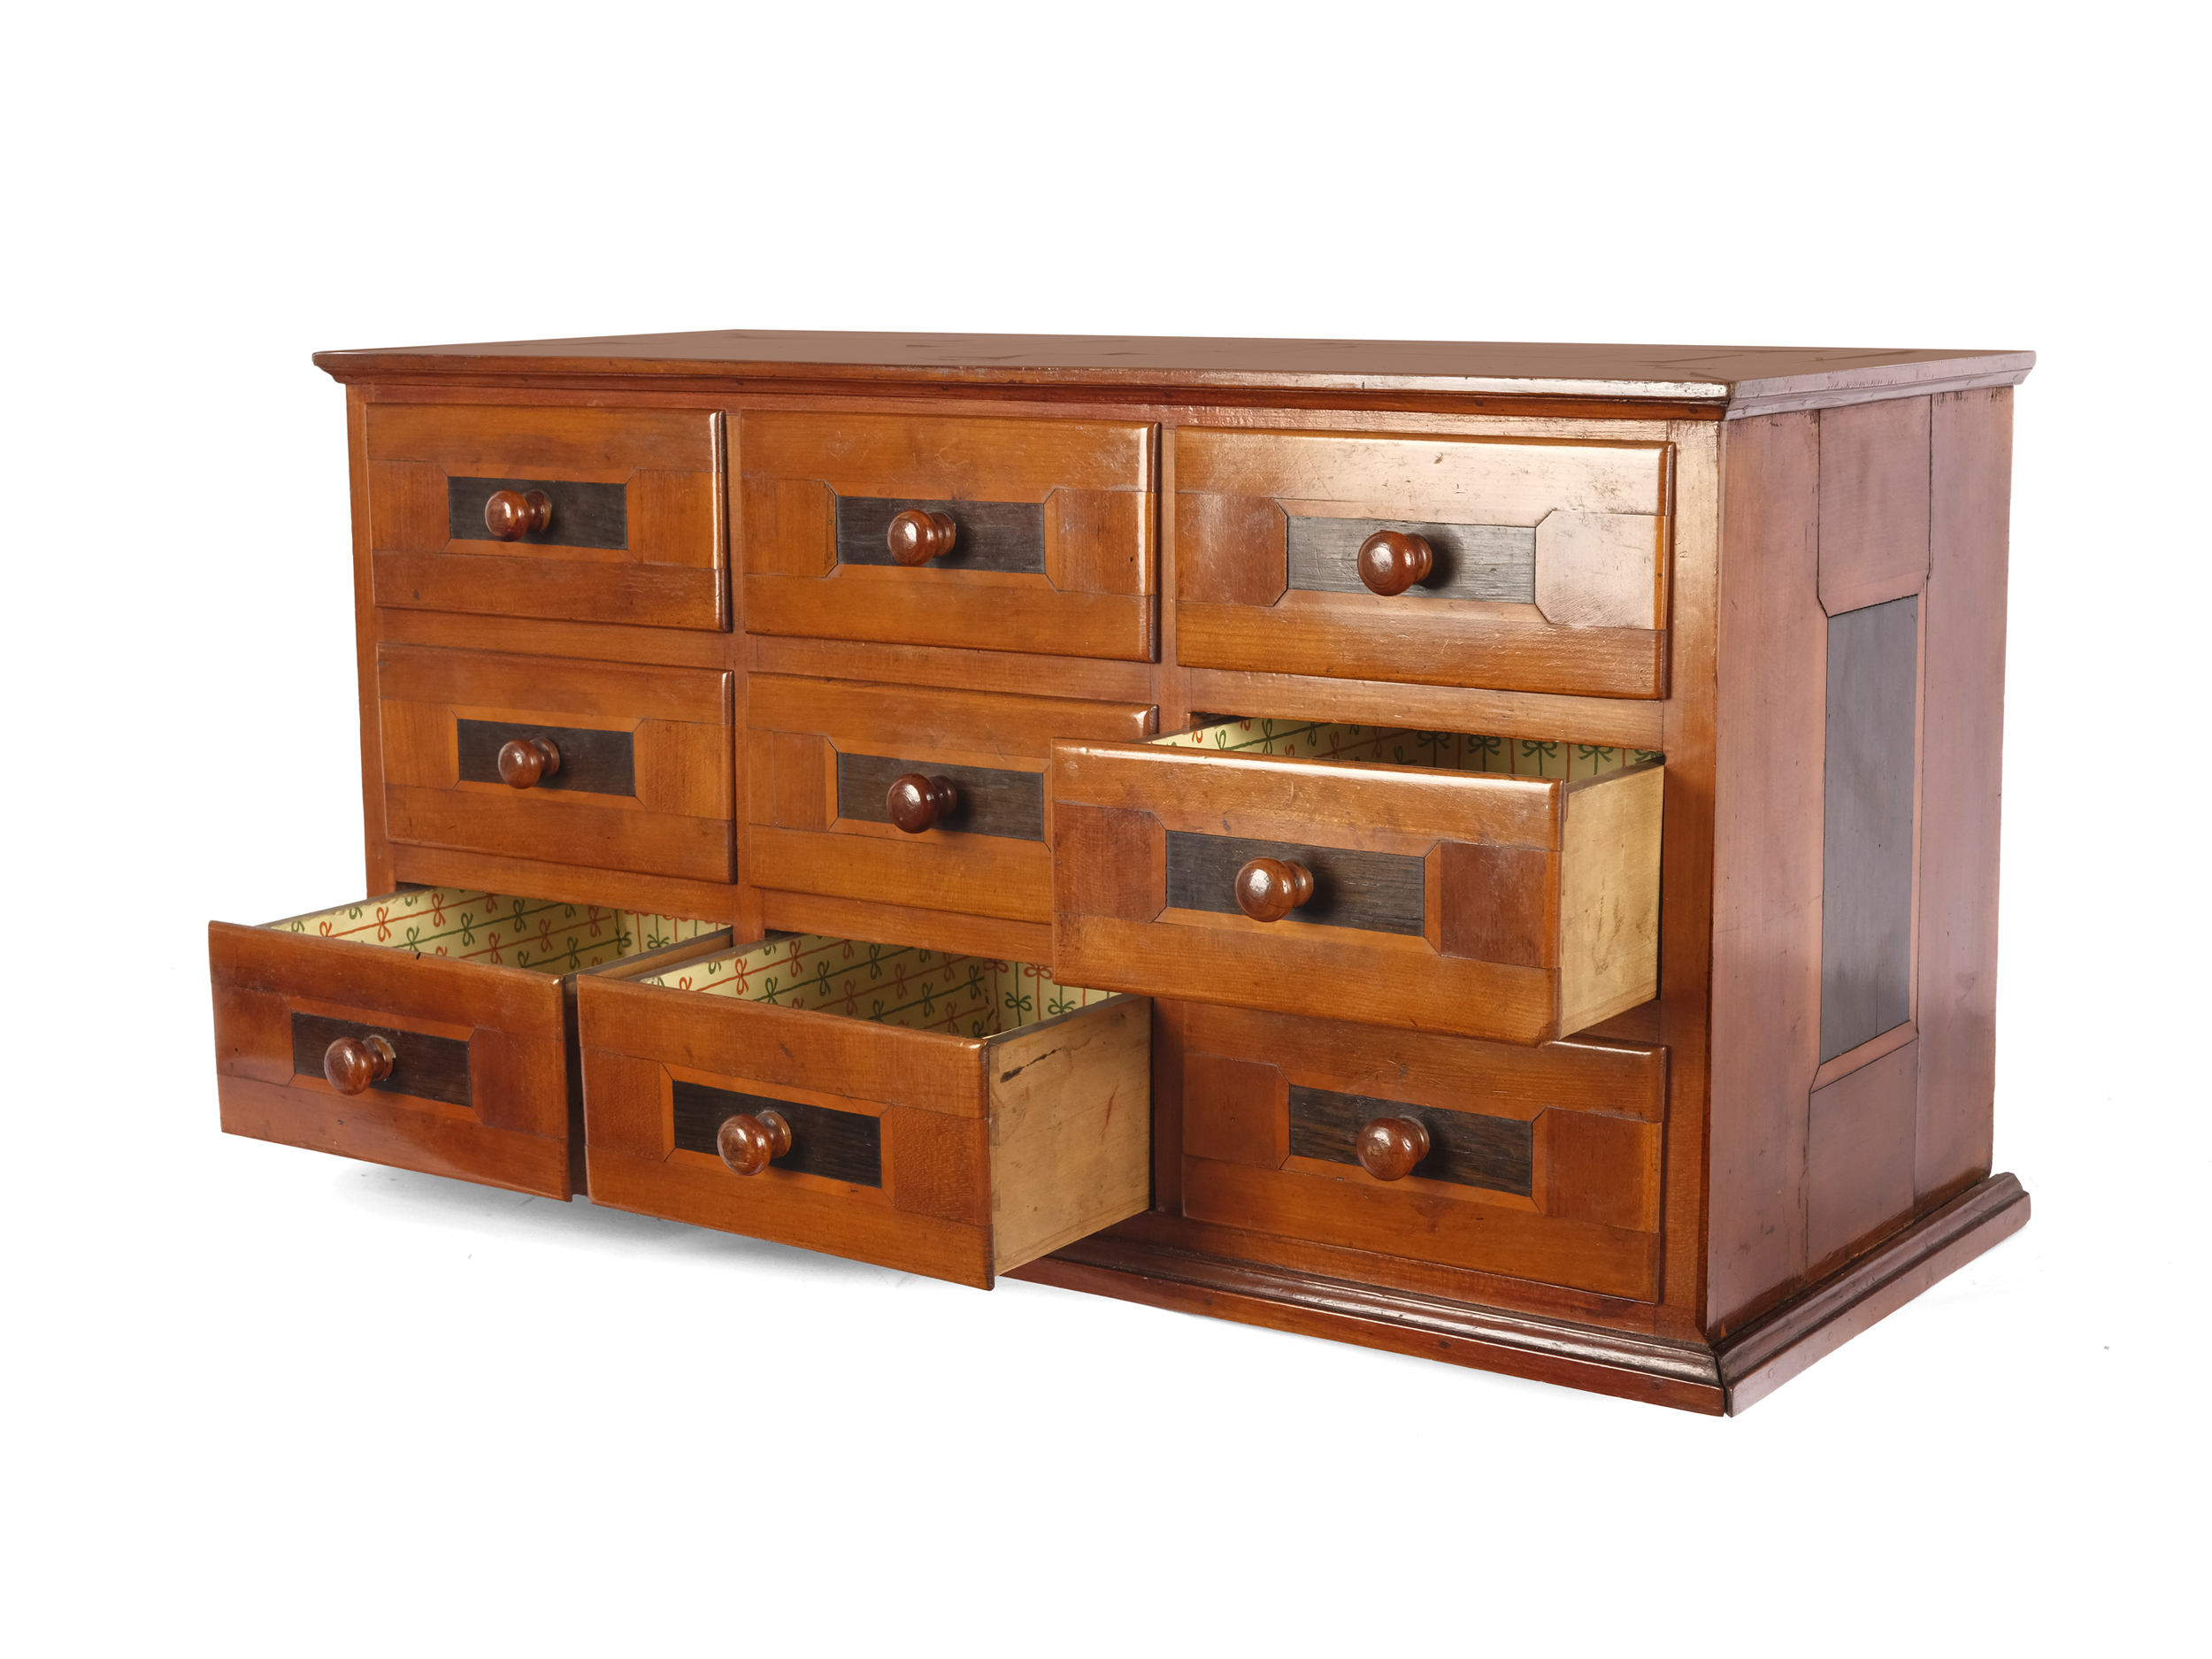 Top box, 9 drawers, around 1760/70 - Image 3 of 7